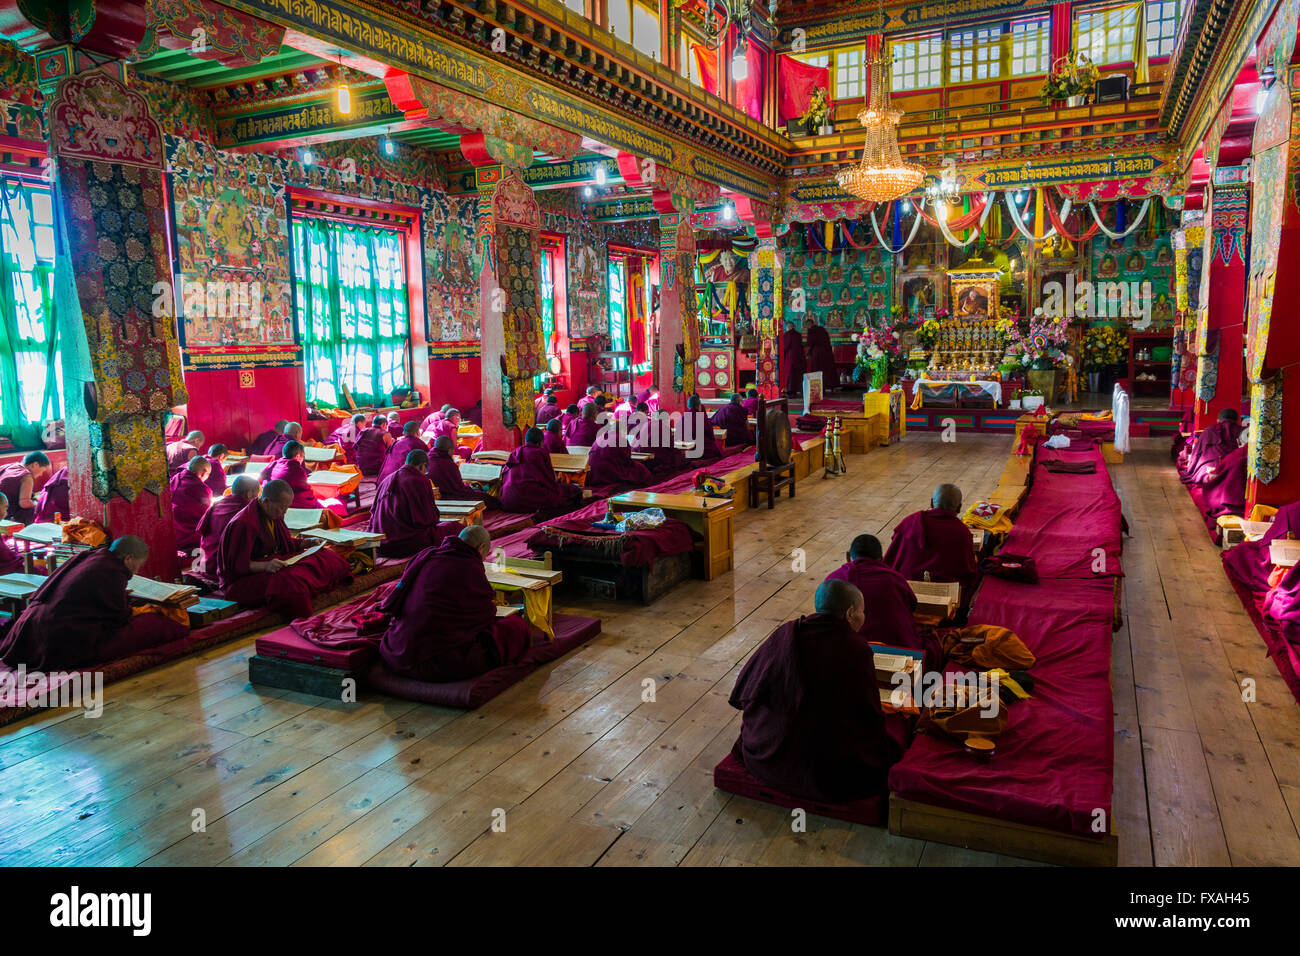 Many monks and nuns are praying inside the monastery Thupten Chholing Gompa, Junbesi, Solo Khumbu, Nepal Stock Photo